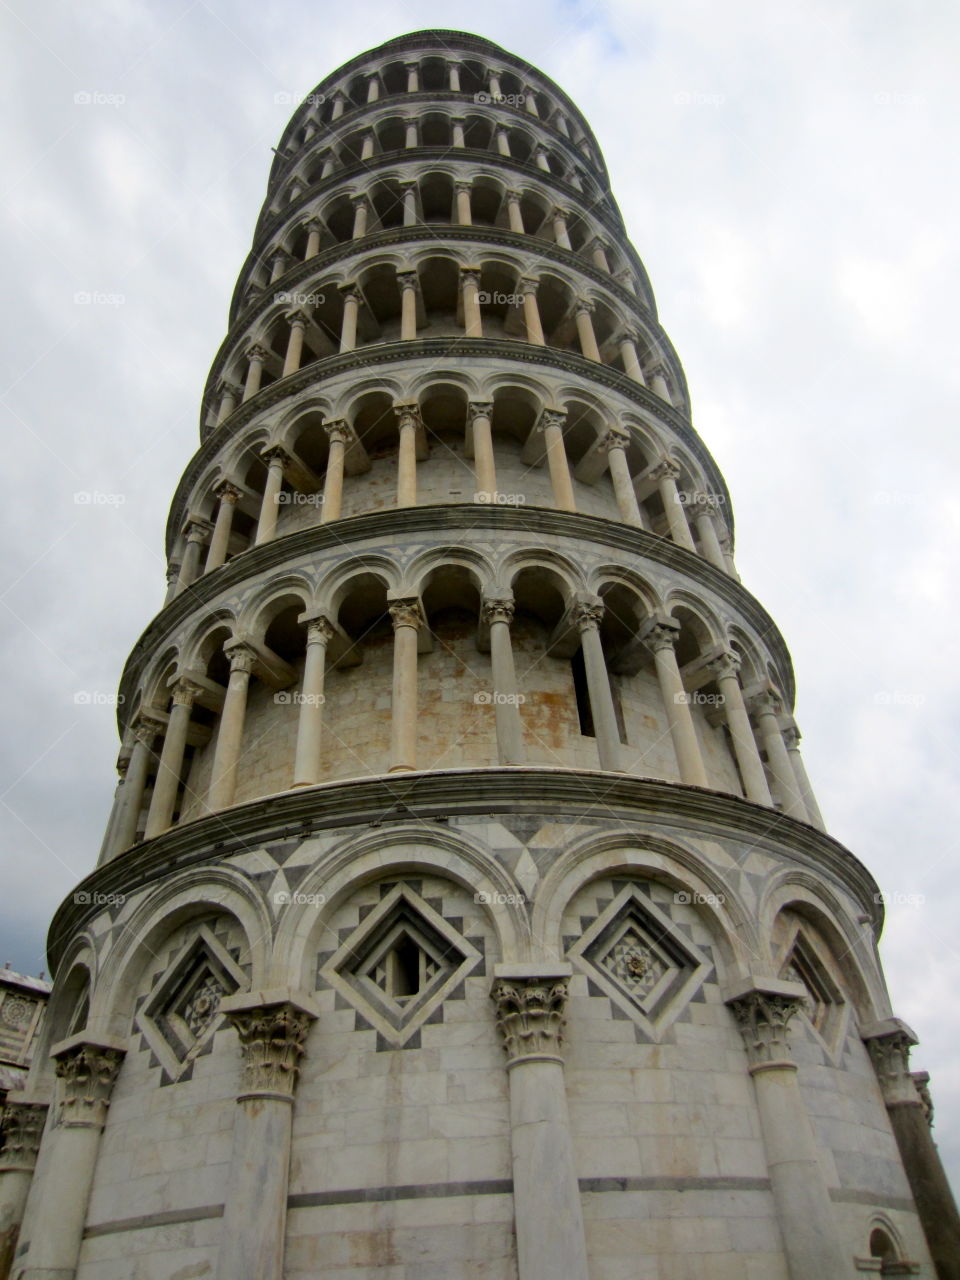 Architecture, Pisa, Travel, Building, Sky